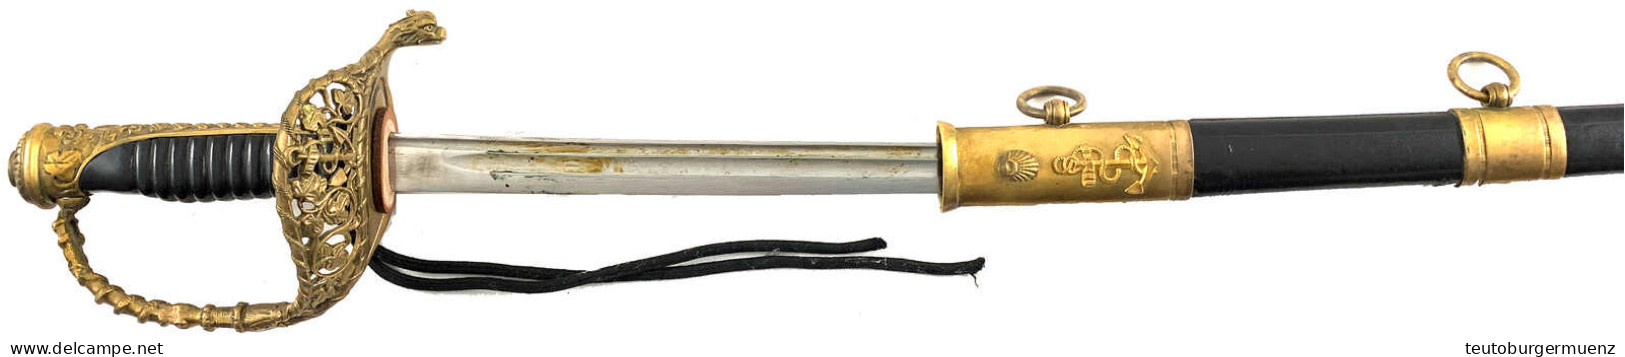 Marine-Offizierssäbel, Modell 1854. Hersteller BF. In Scheide. Gesamtlänge 90 Cm - Knives/Swords